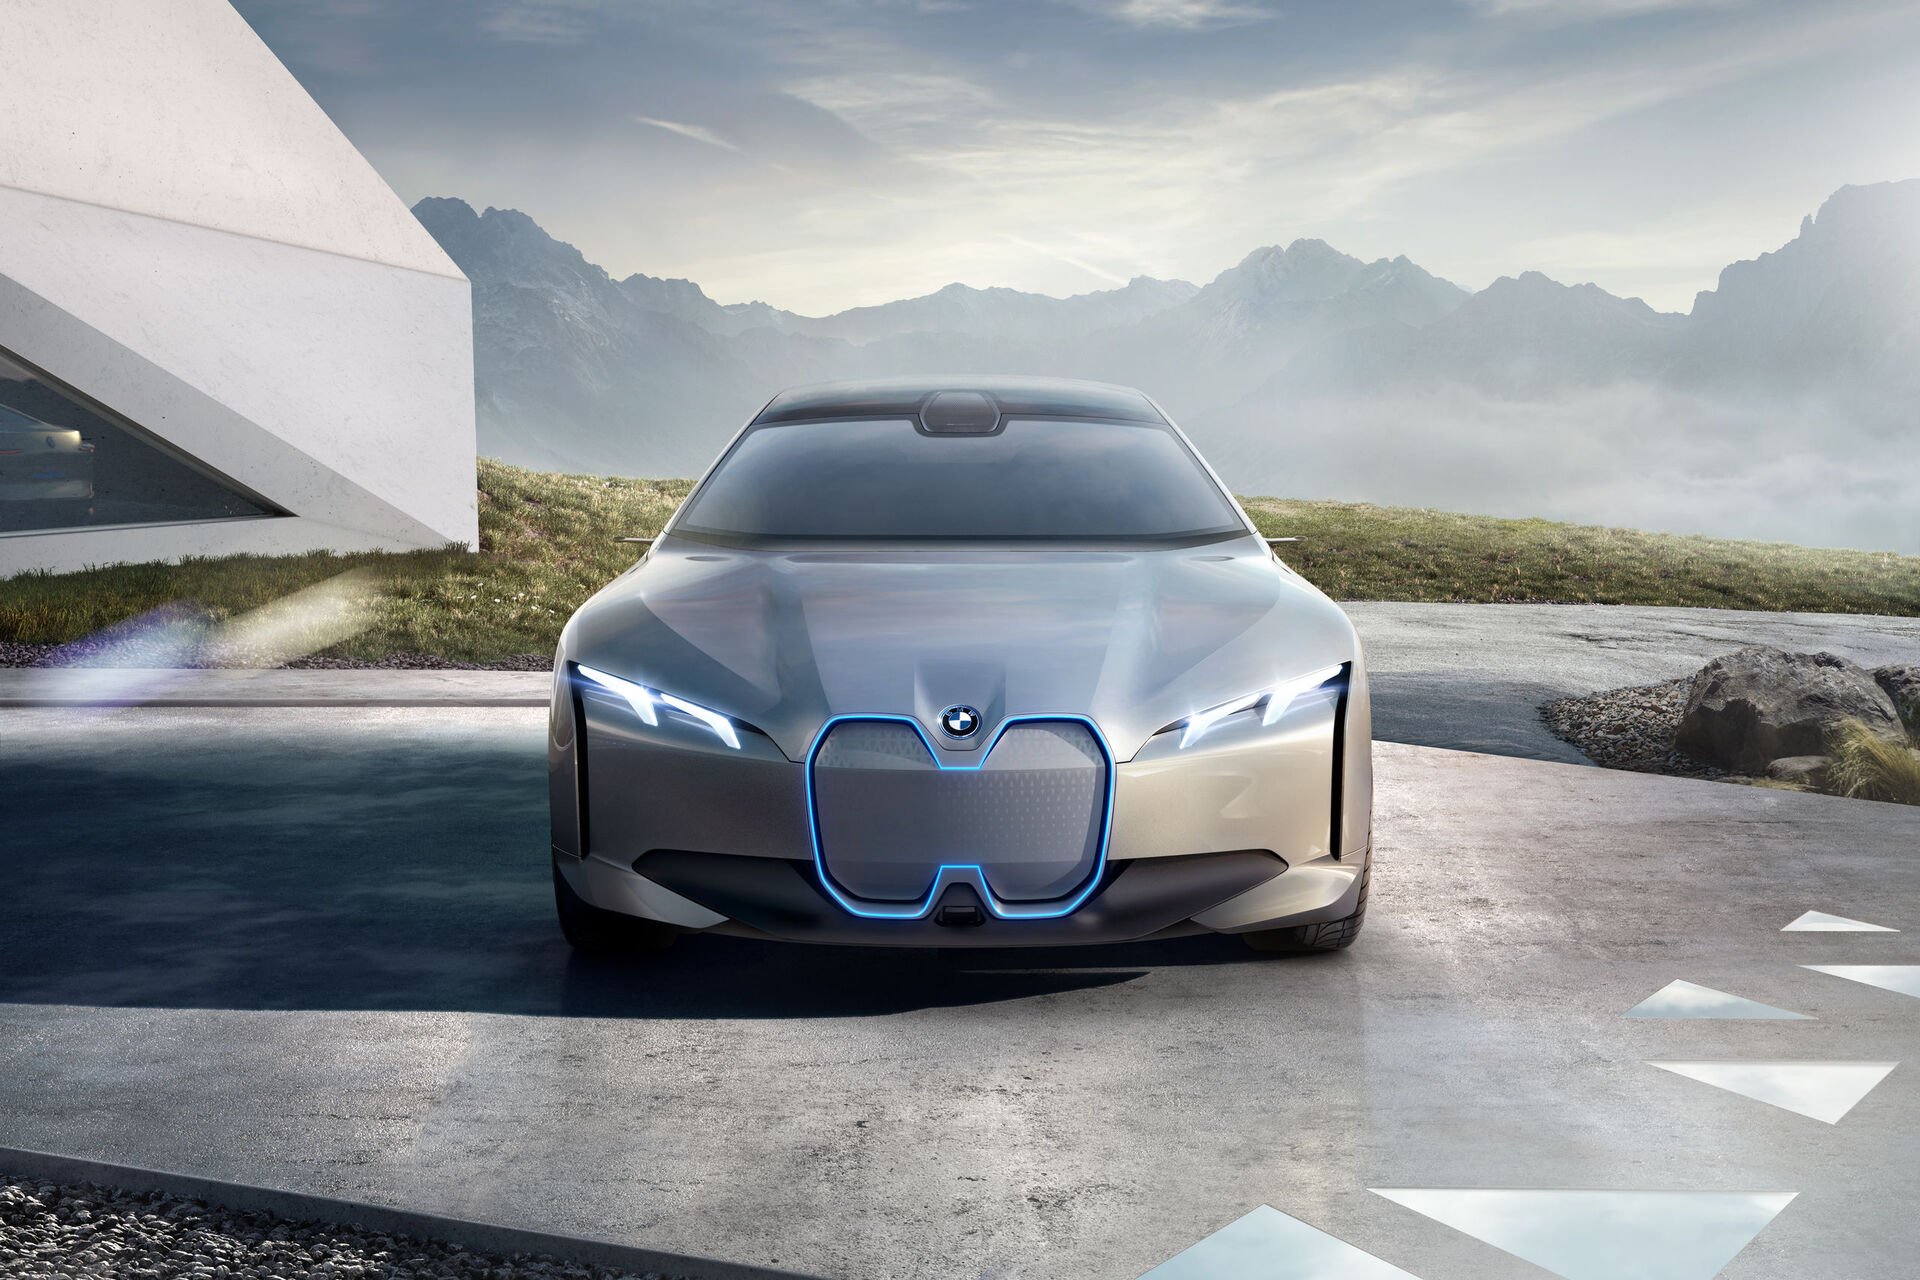 BMW Vision Dynamics